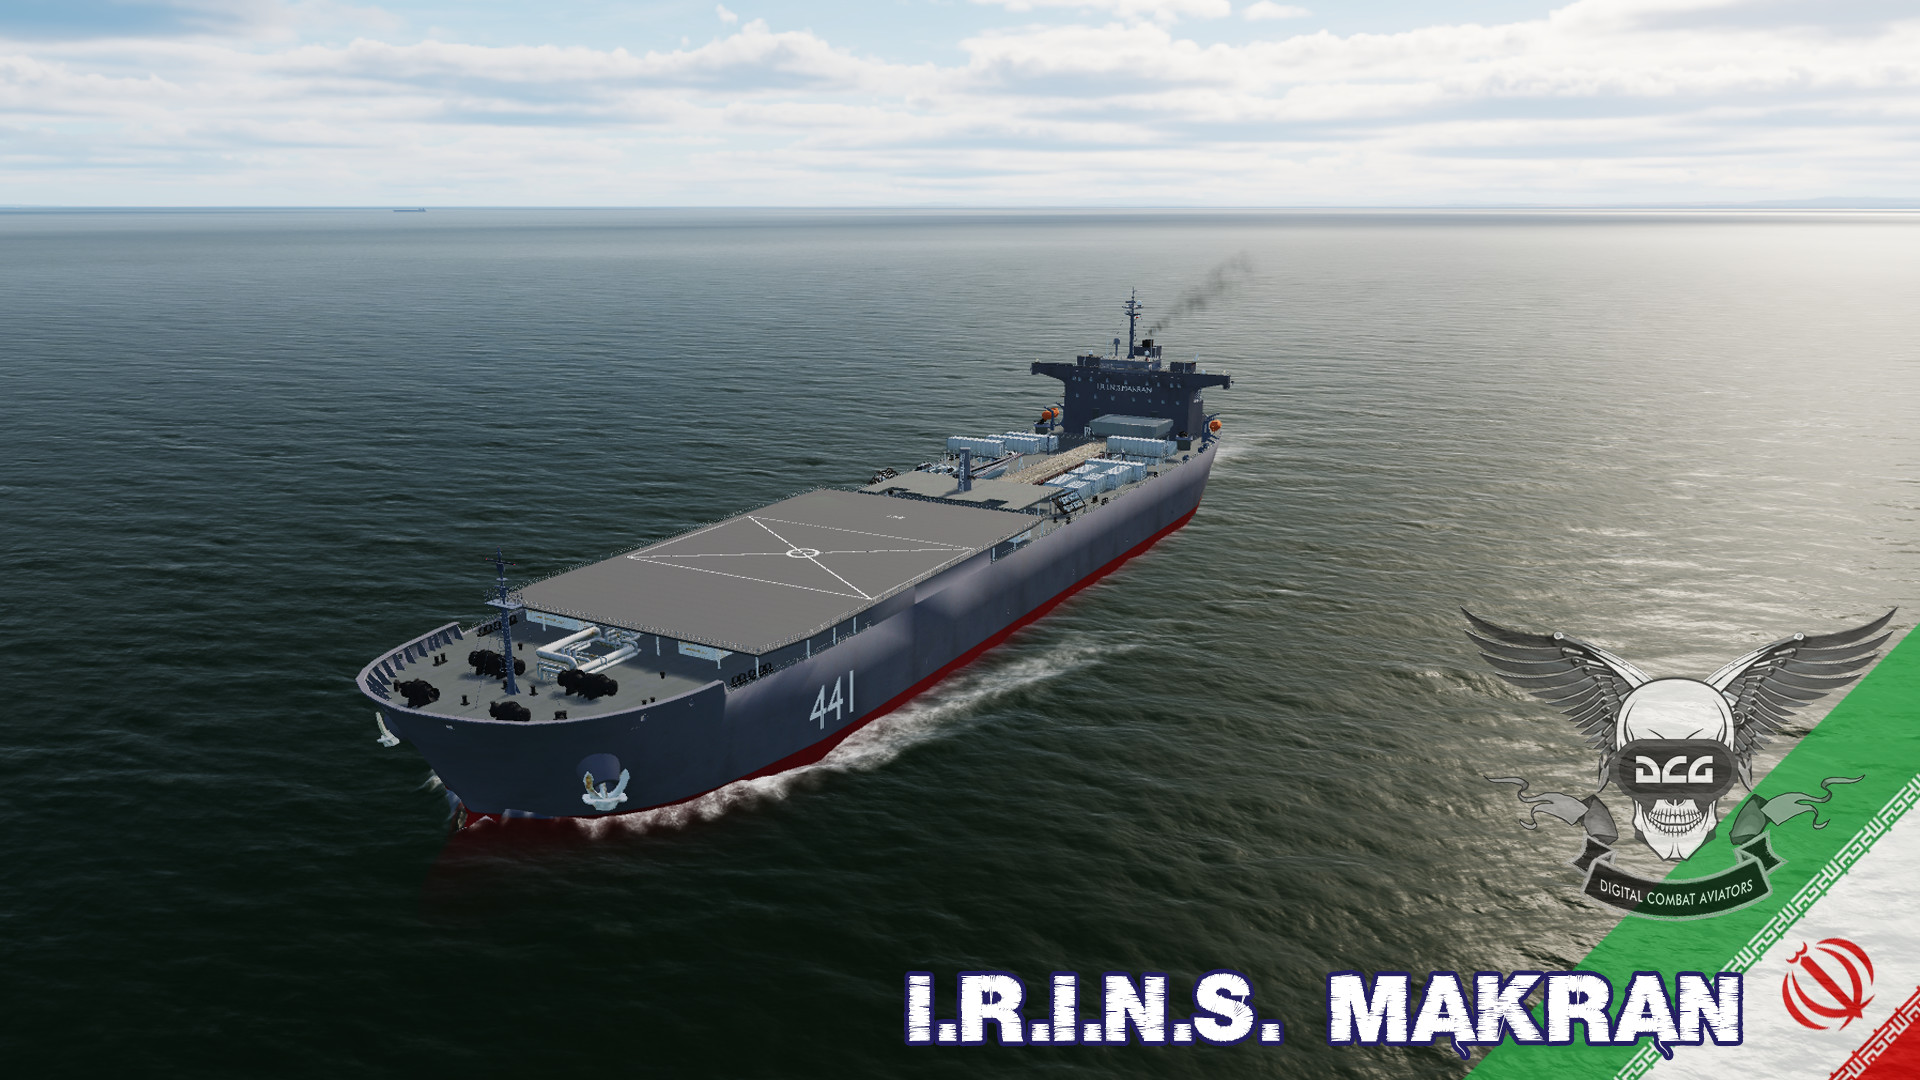 I.R.I.N.S. MAKRAN (Iranian Forward Operating Base Ship)